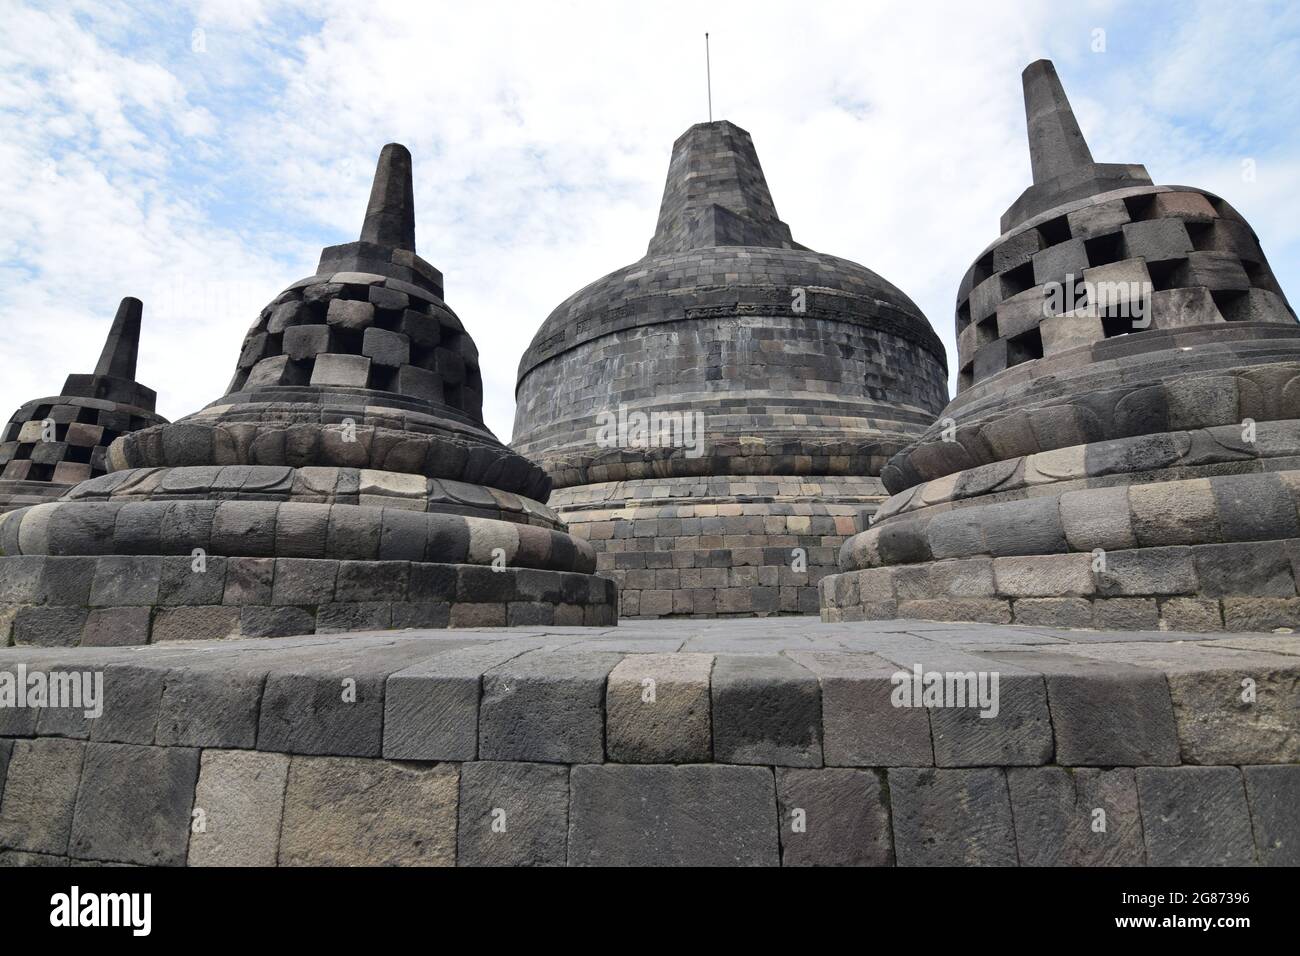 UNESCO World Heritage Site: Stupas on the Borobudur Temple in Java Stock Photo